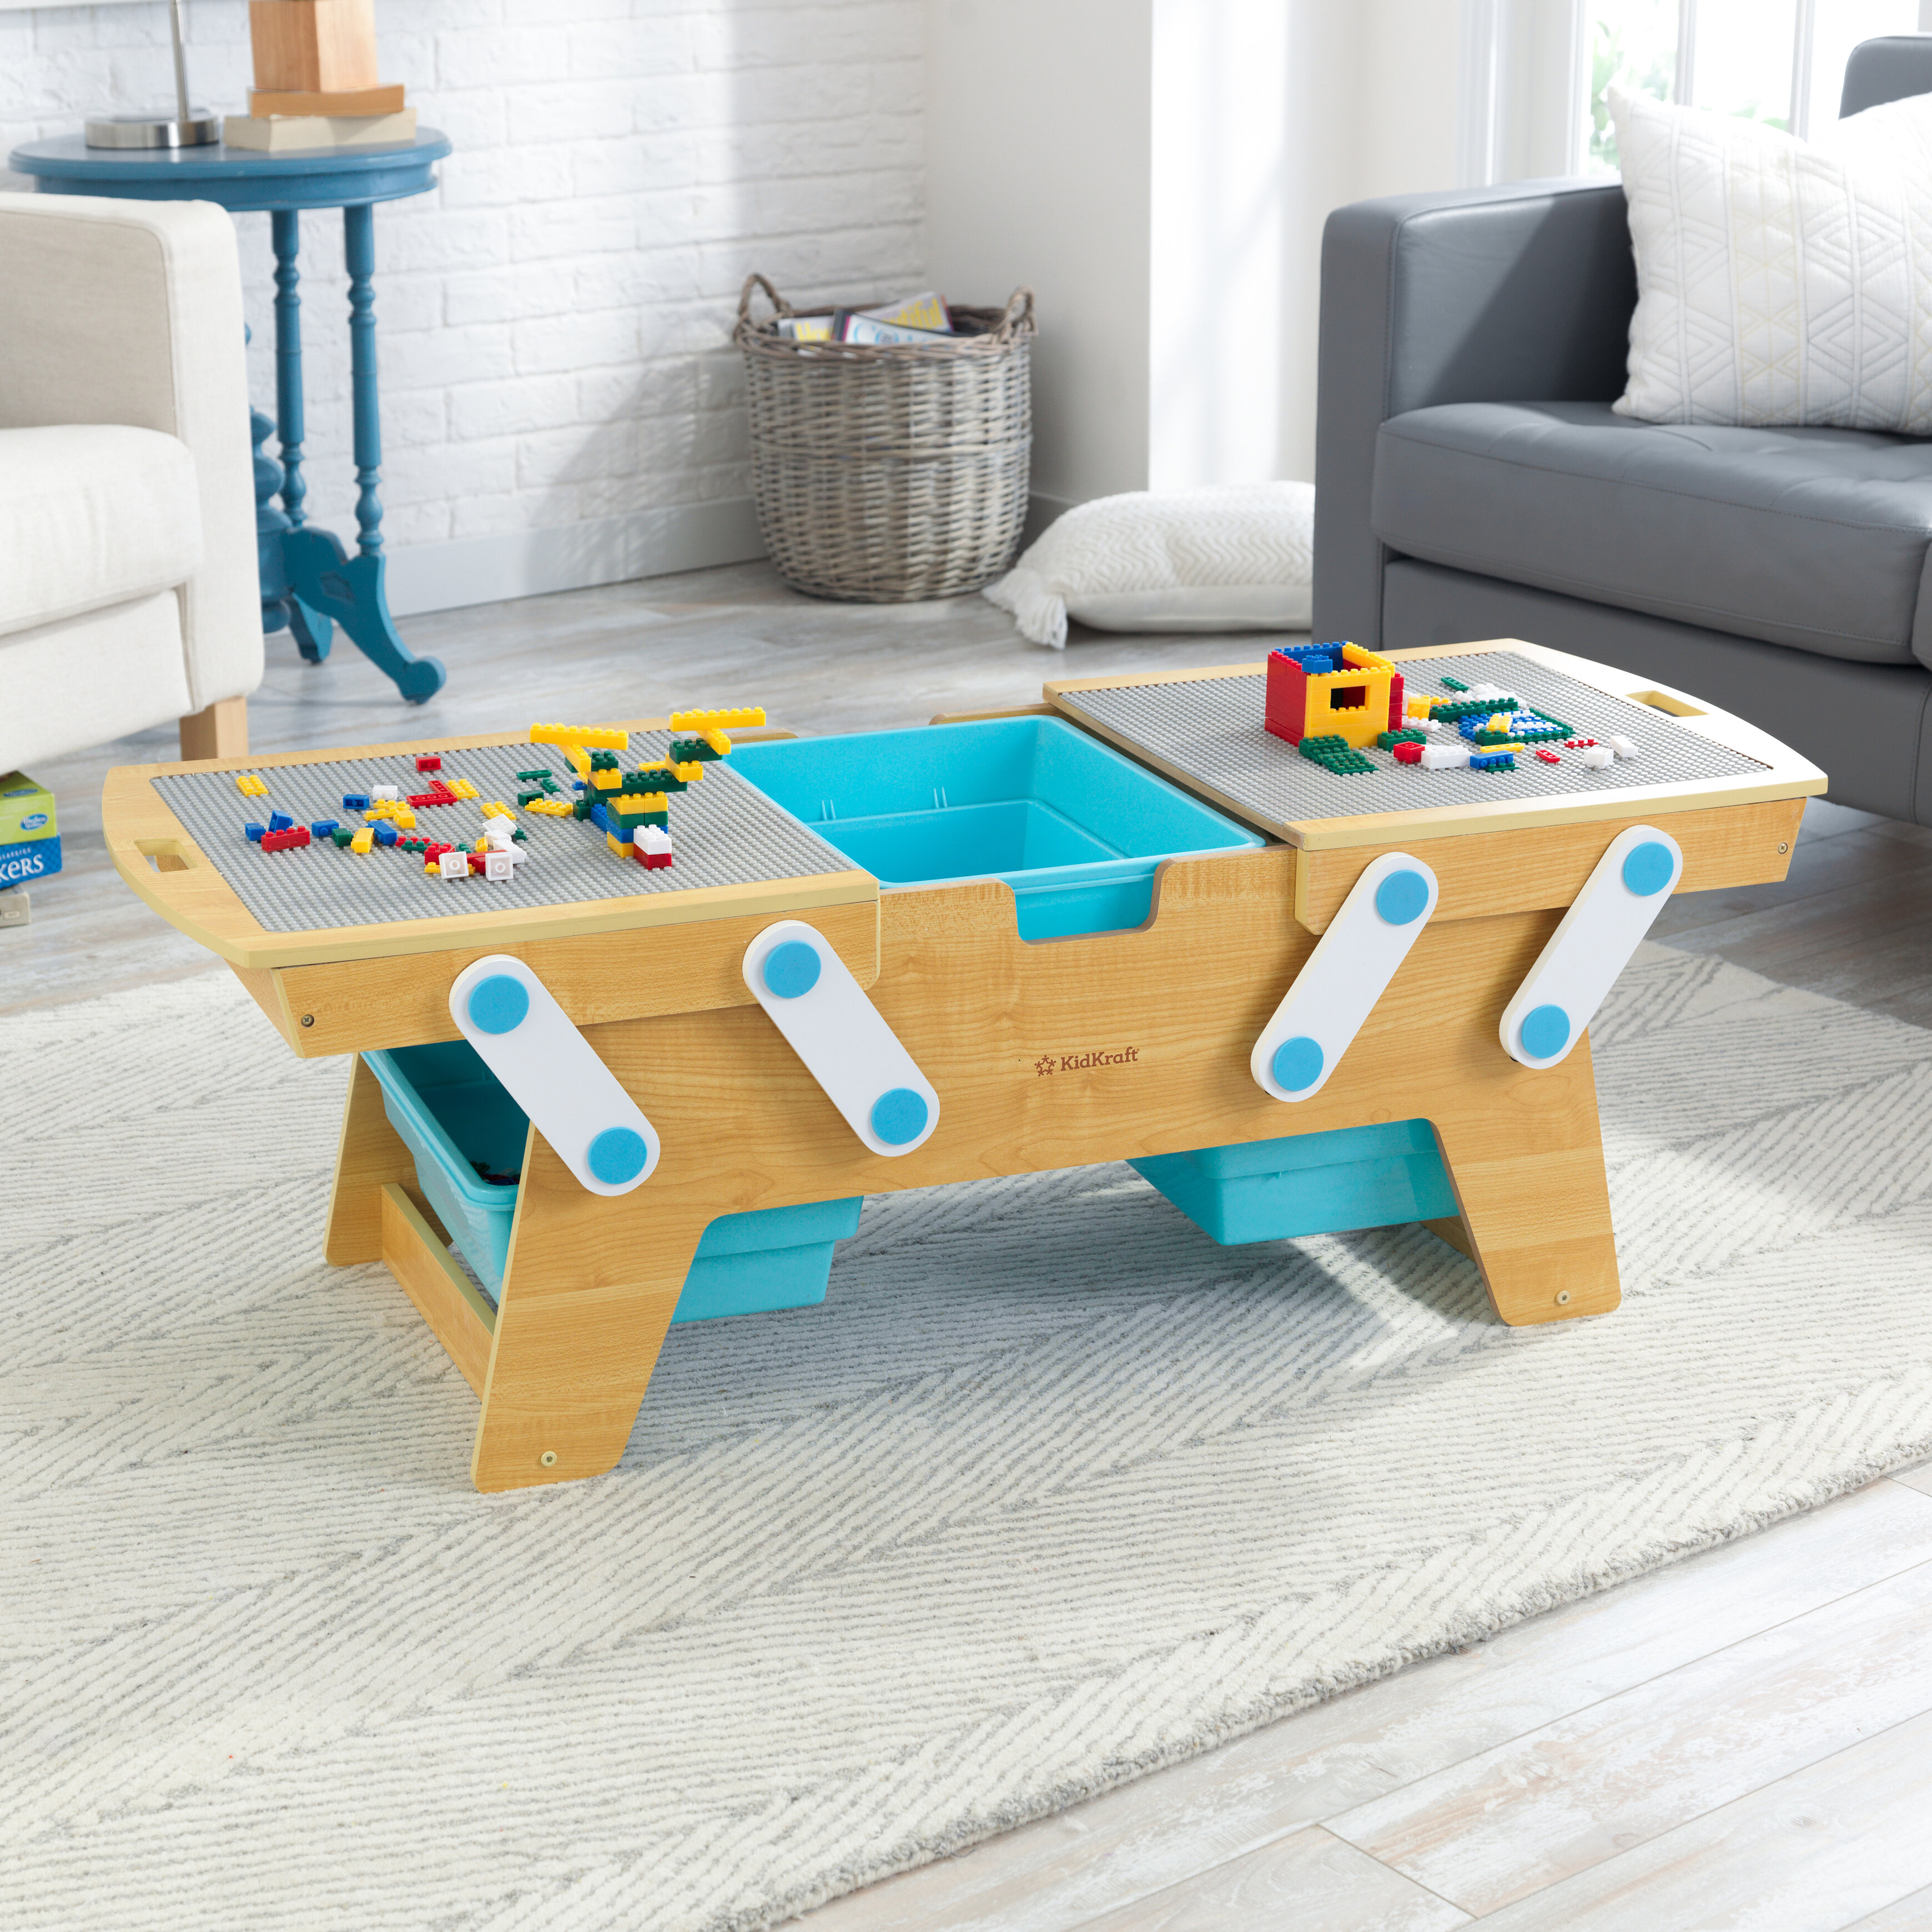 Bricks Play N Store Wooden Table, Kids Activity Table, Natural & Reviews | Wayfair